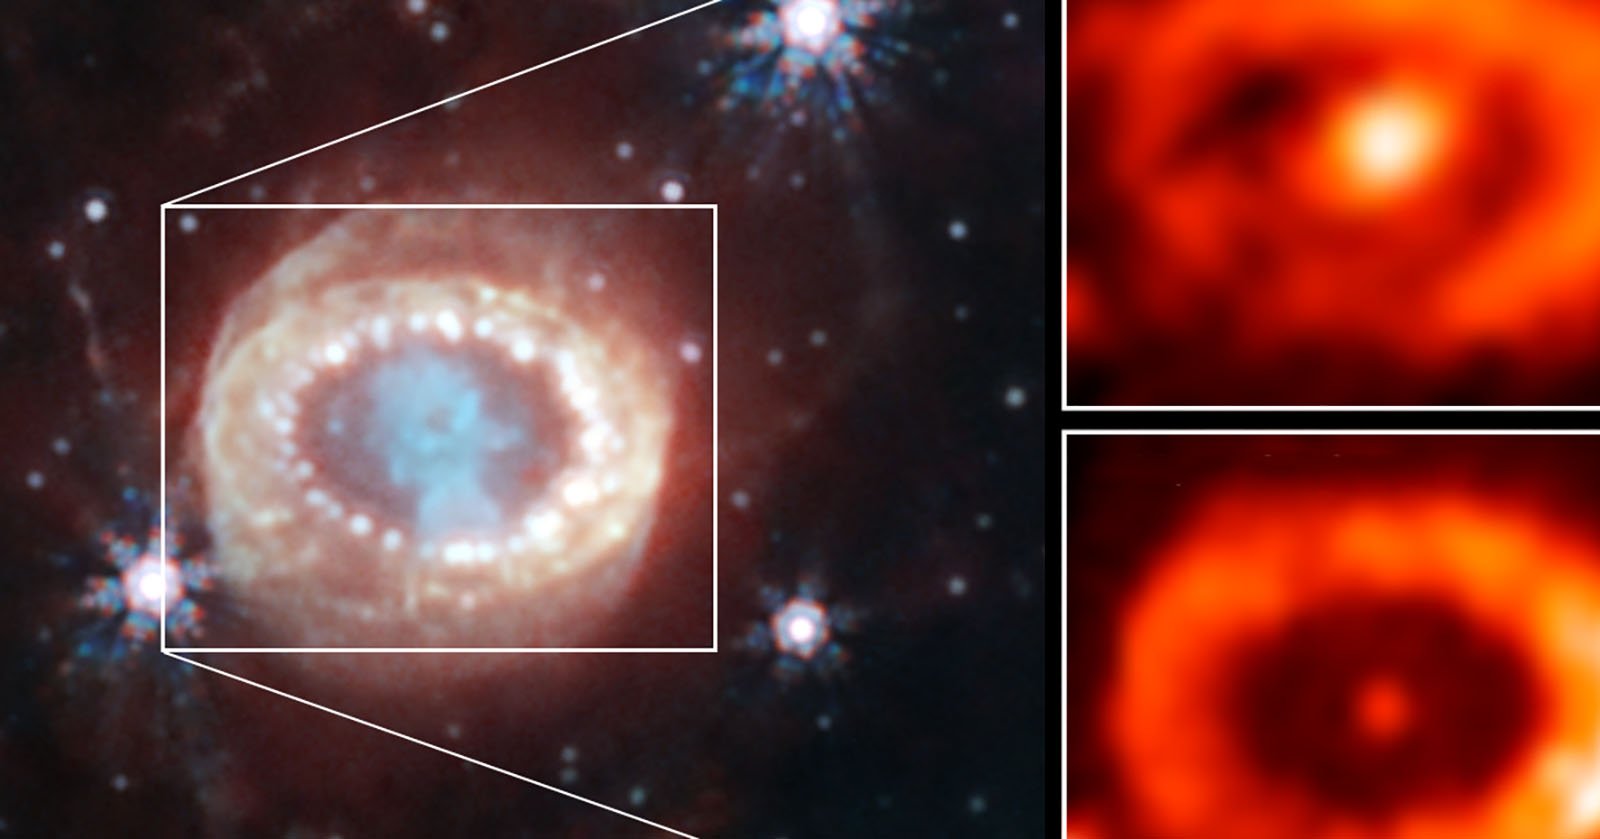  webb finds first direct evidence neutron star supernova 